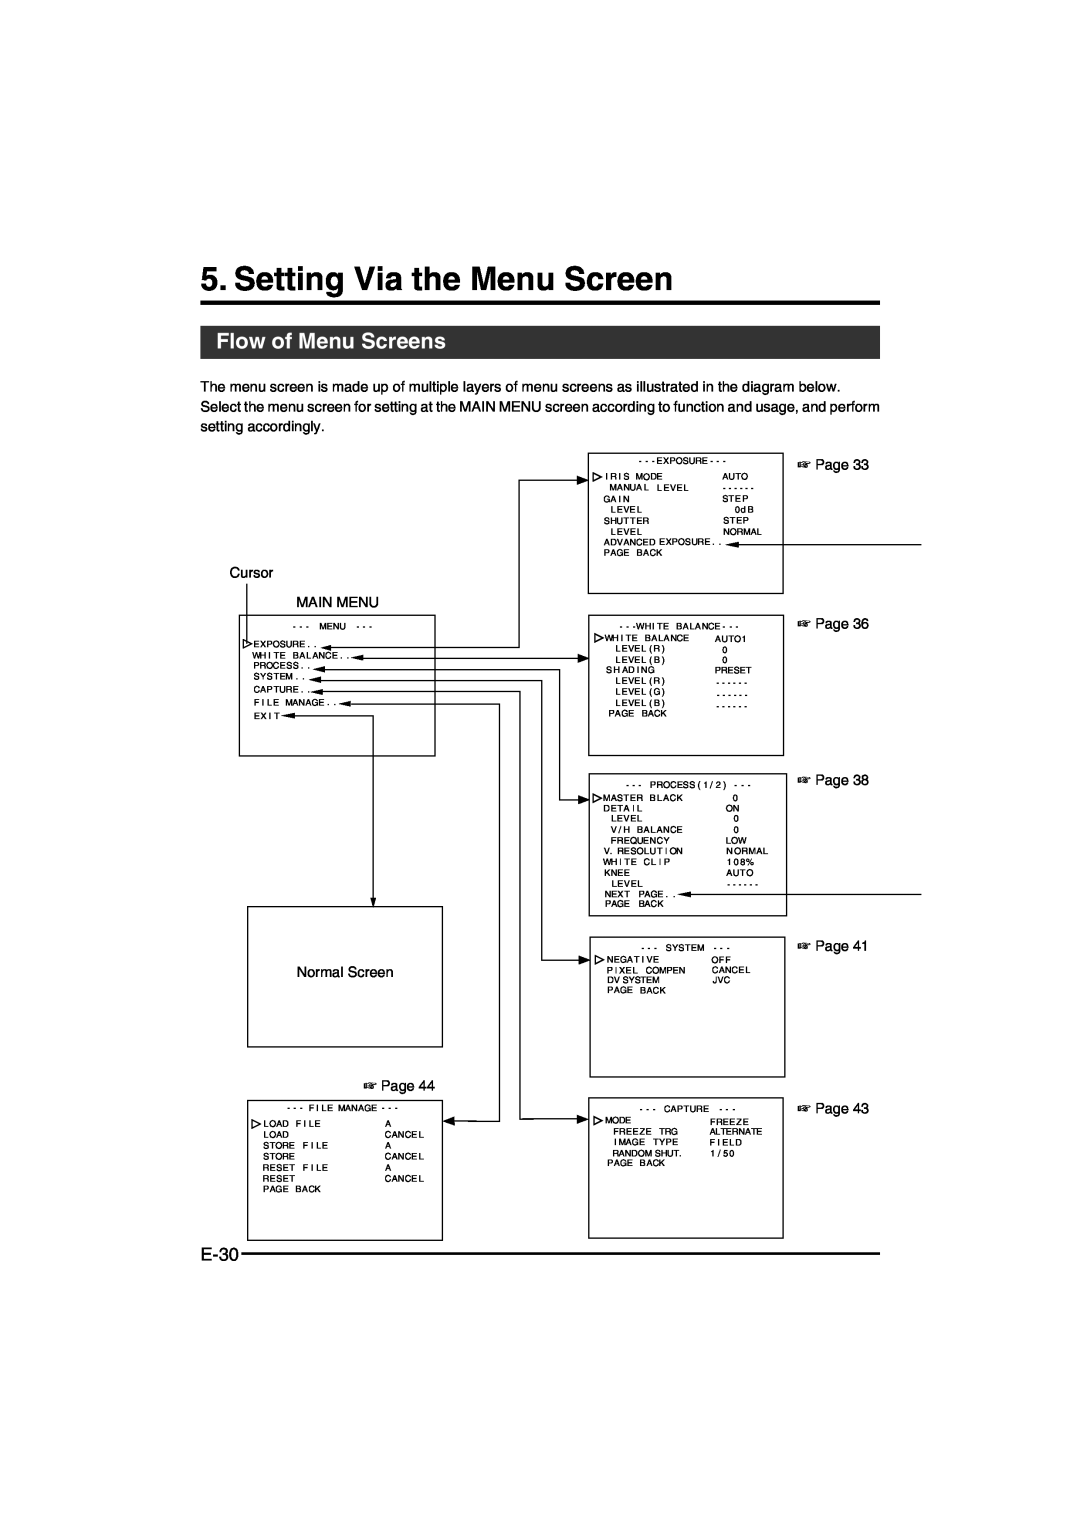 JVC KY-F550E instruction manual Setting Via the Menu Screen, Flow of Menu Screens, E-30, Page 